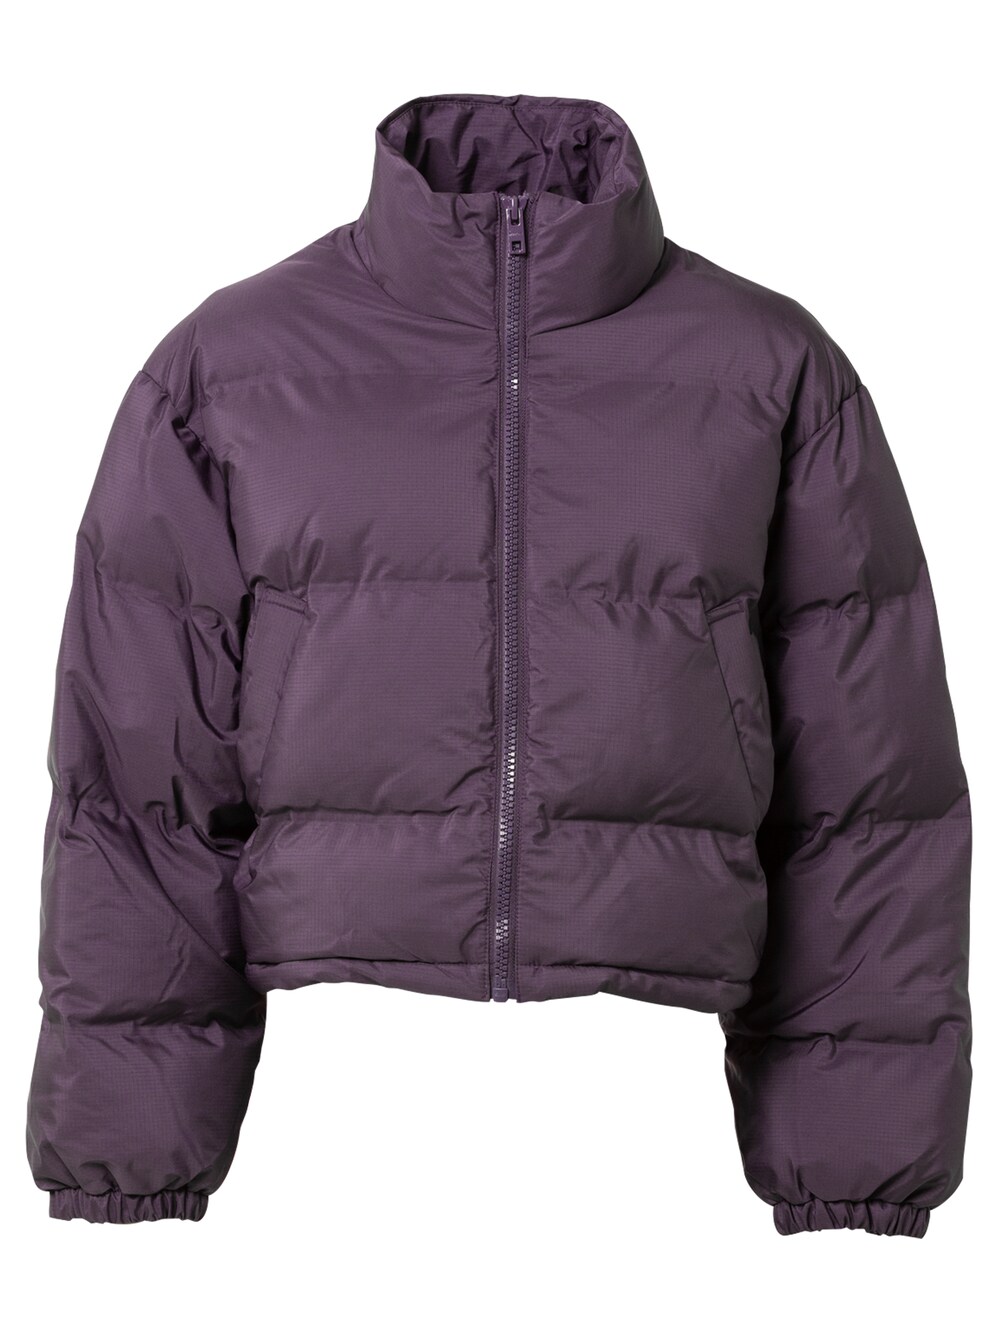 Межсезонная куртка Weekday Promis, темно фиолетовый межсезонная куртка weekday blade бежевый